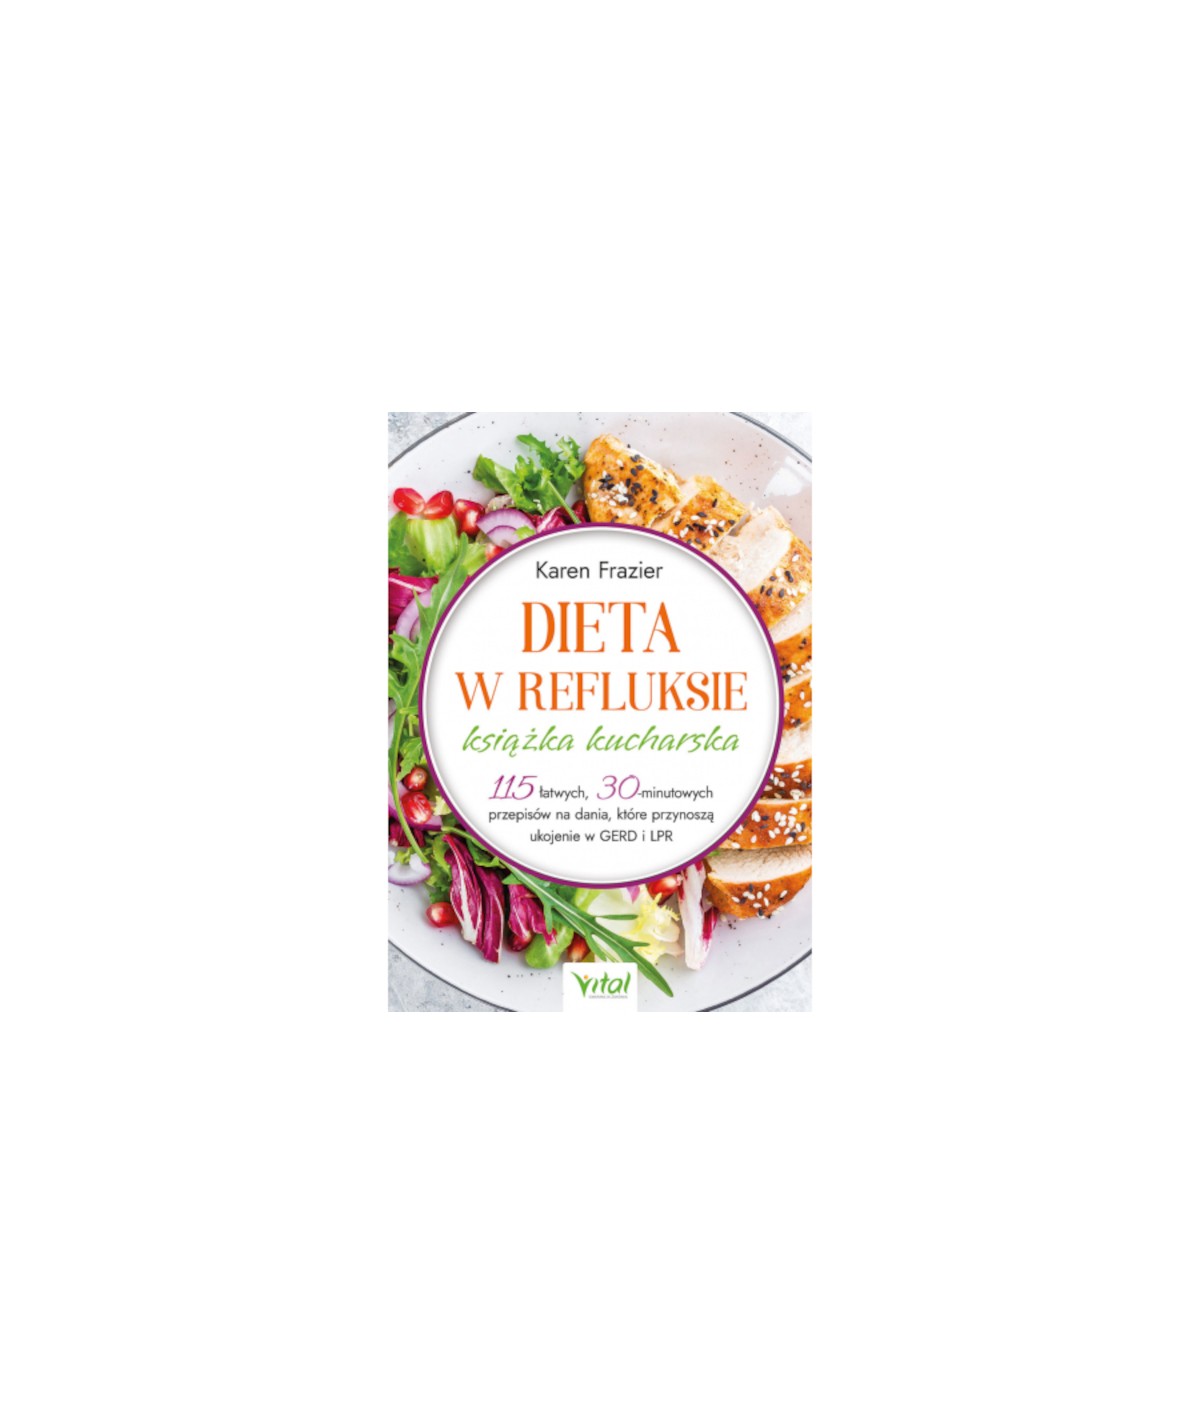 Dieta w refluksie książka kucharska | Karen FrazierDieta w refluksie książka kucharska | Karen Frazier